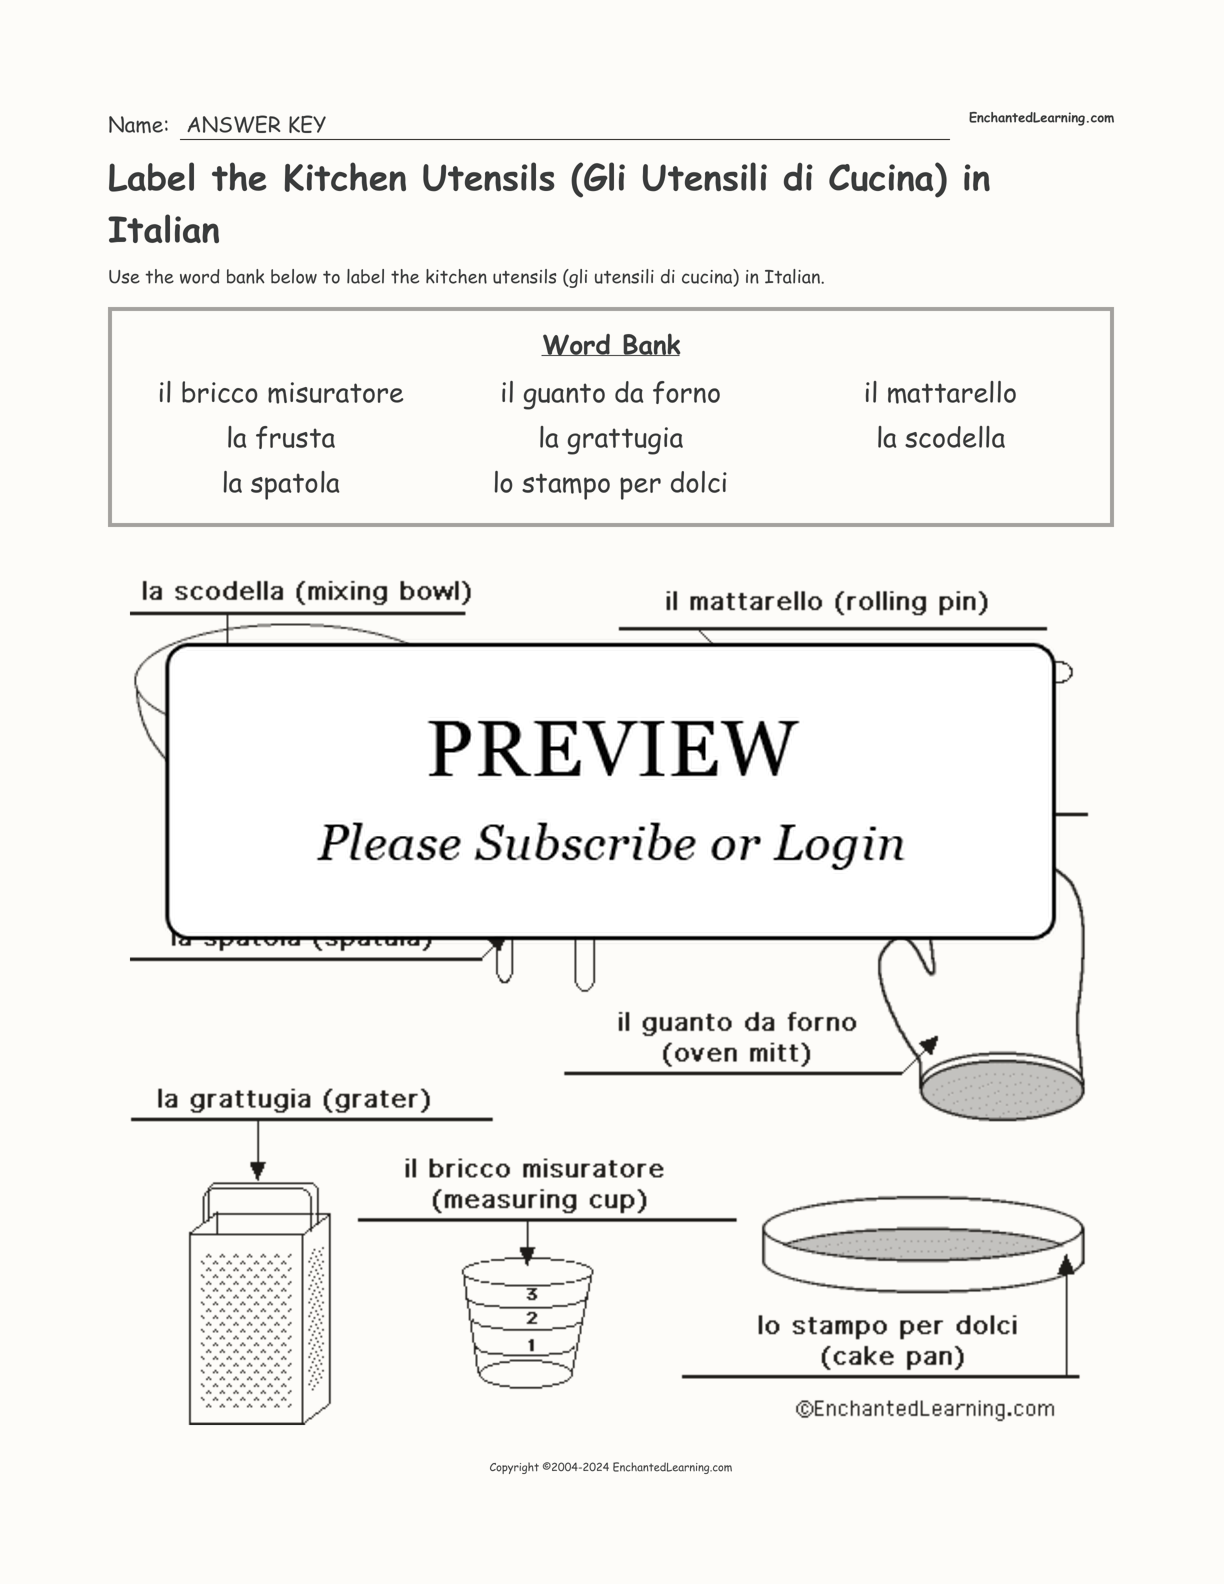 Label the Kitchen Utensils (Gli Utensili di Cucina) in Italian interactive worksheet page 2